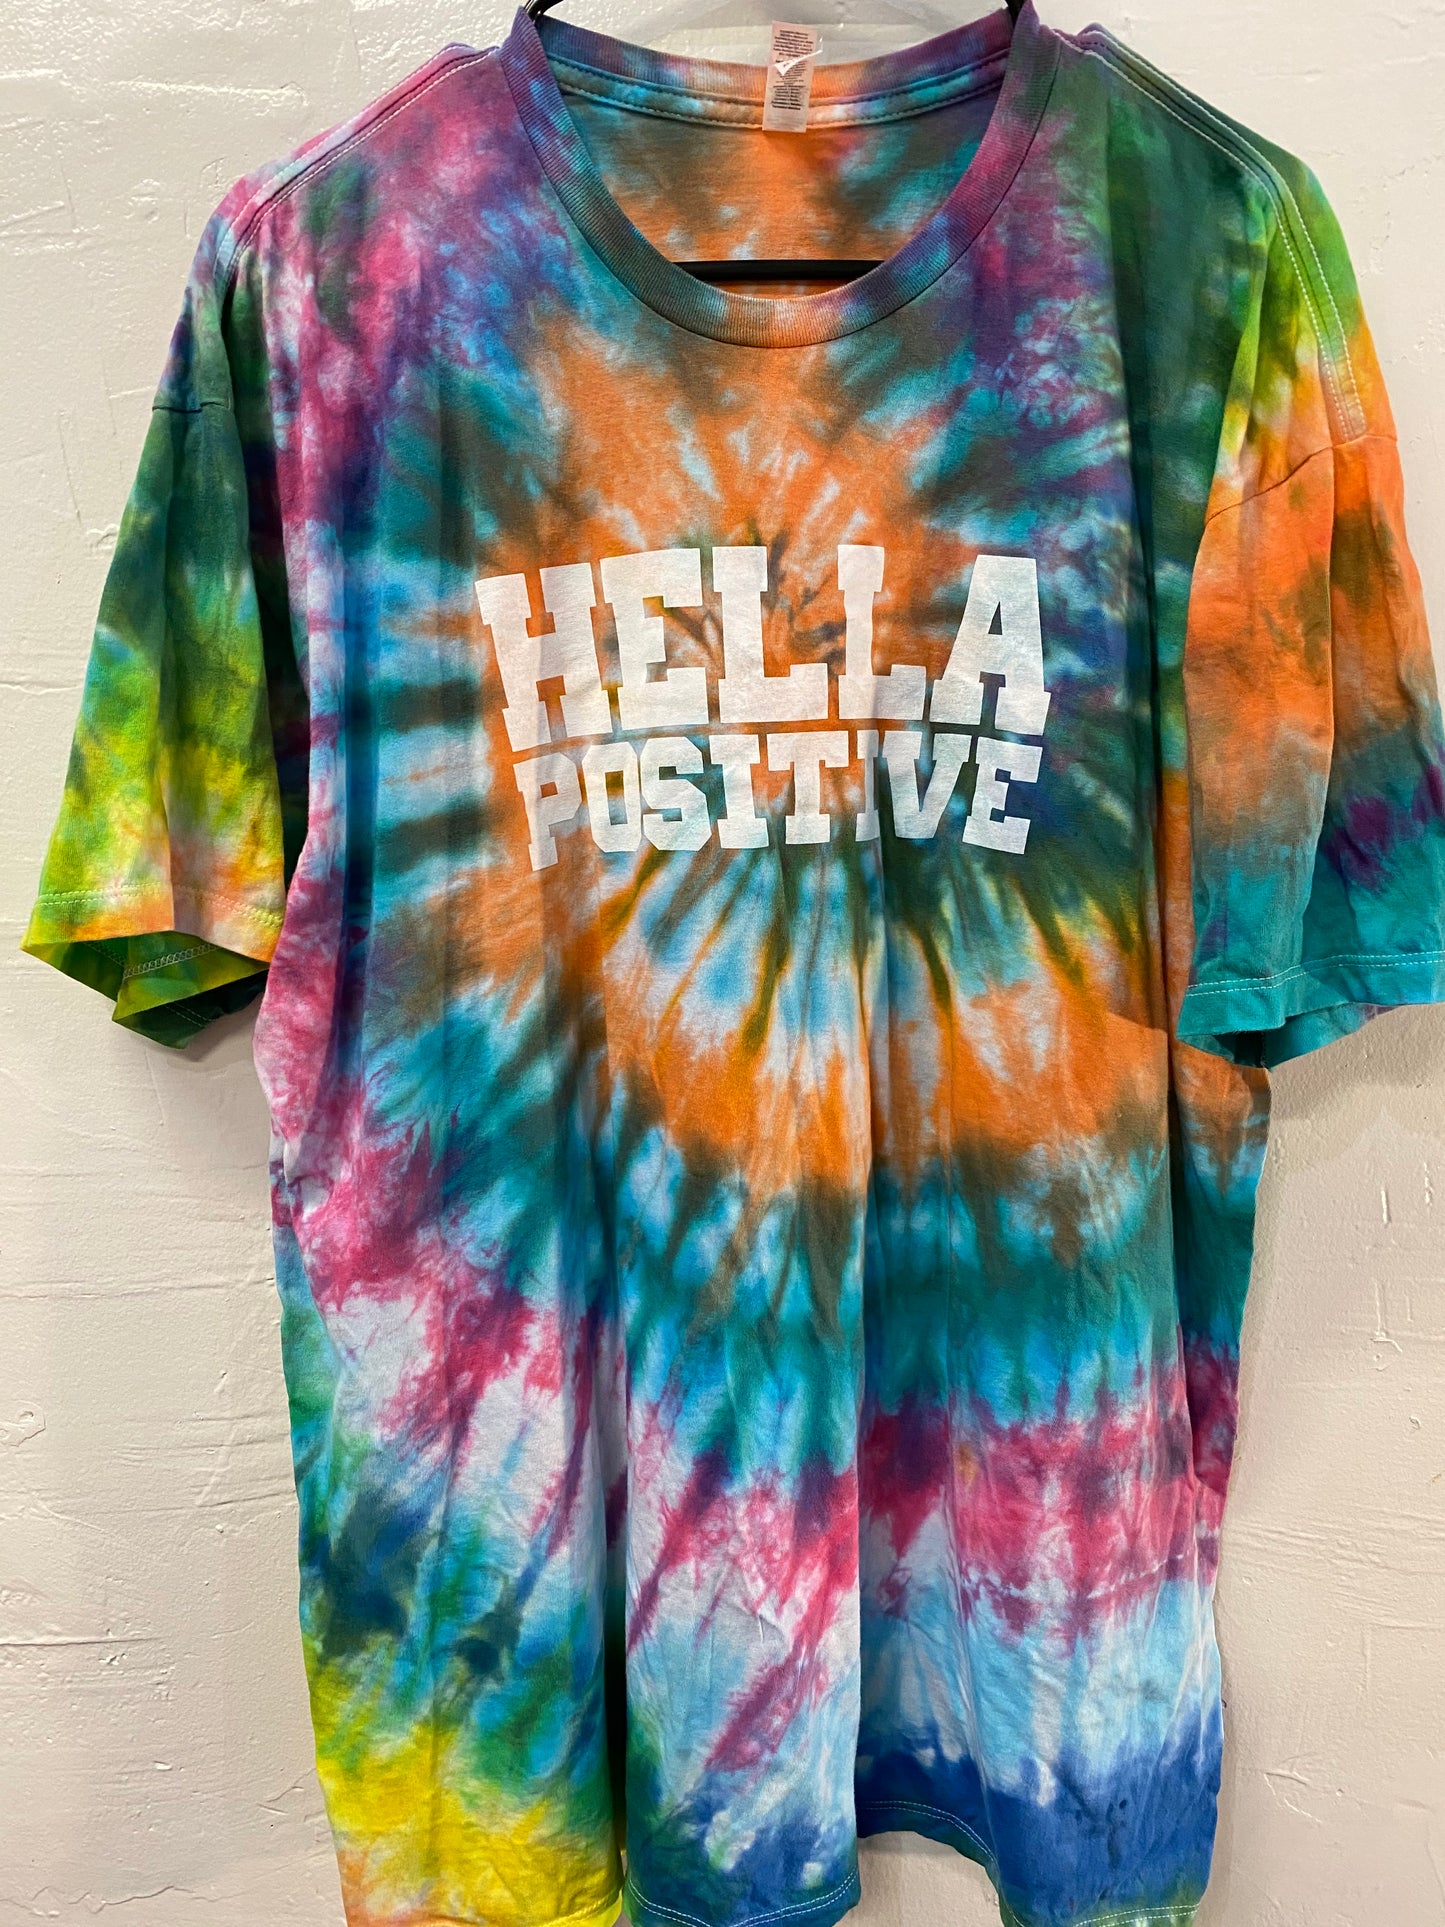 Hella Positive Tie Dye T-Shirt - XL